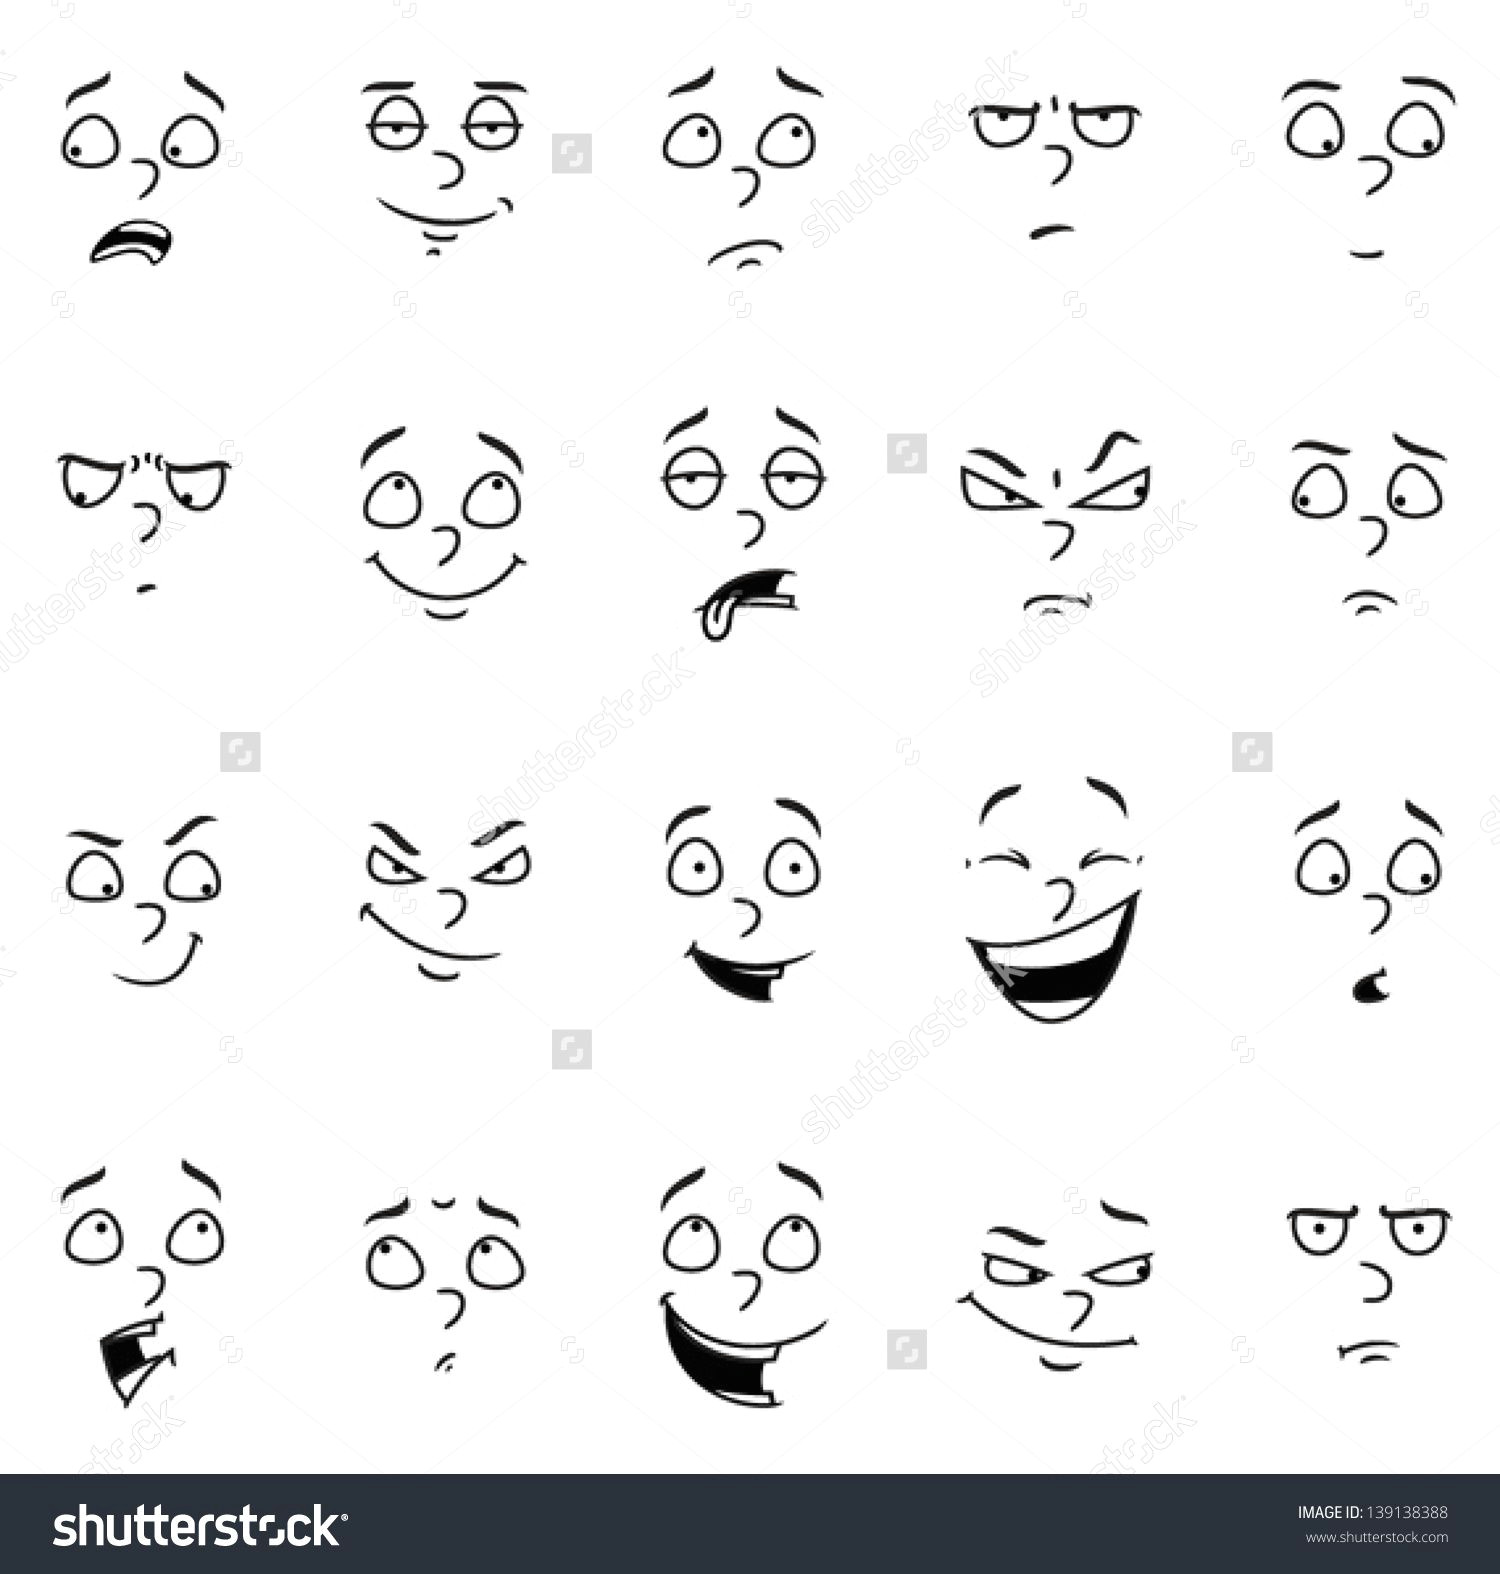 Drawing Cartoon Faces Pdf Simple Woman Cartoon Facial Expressions Buscar Con Google Art